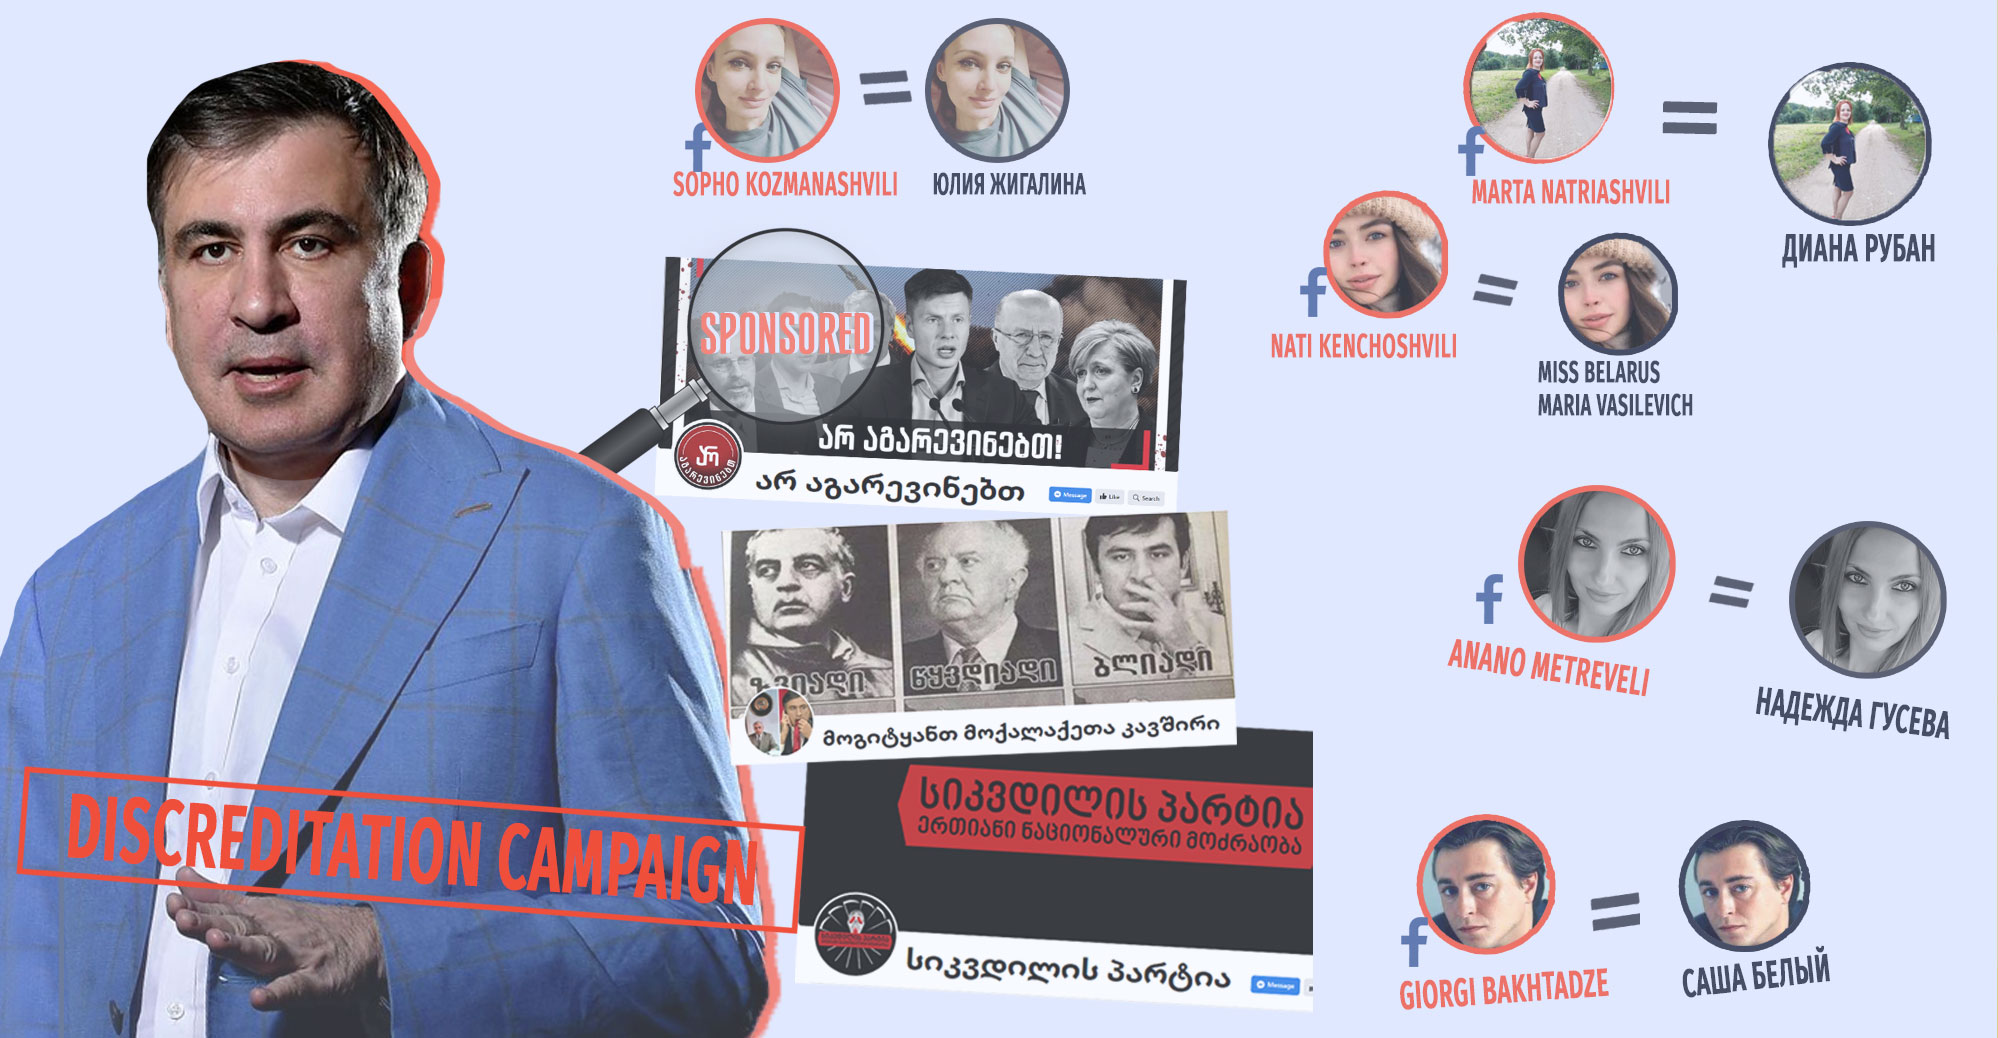 diskreditatsiis kampania es Copy The Mobilization of Trolls and Anonymous Facebook Accounts Against Former President Saakashvili